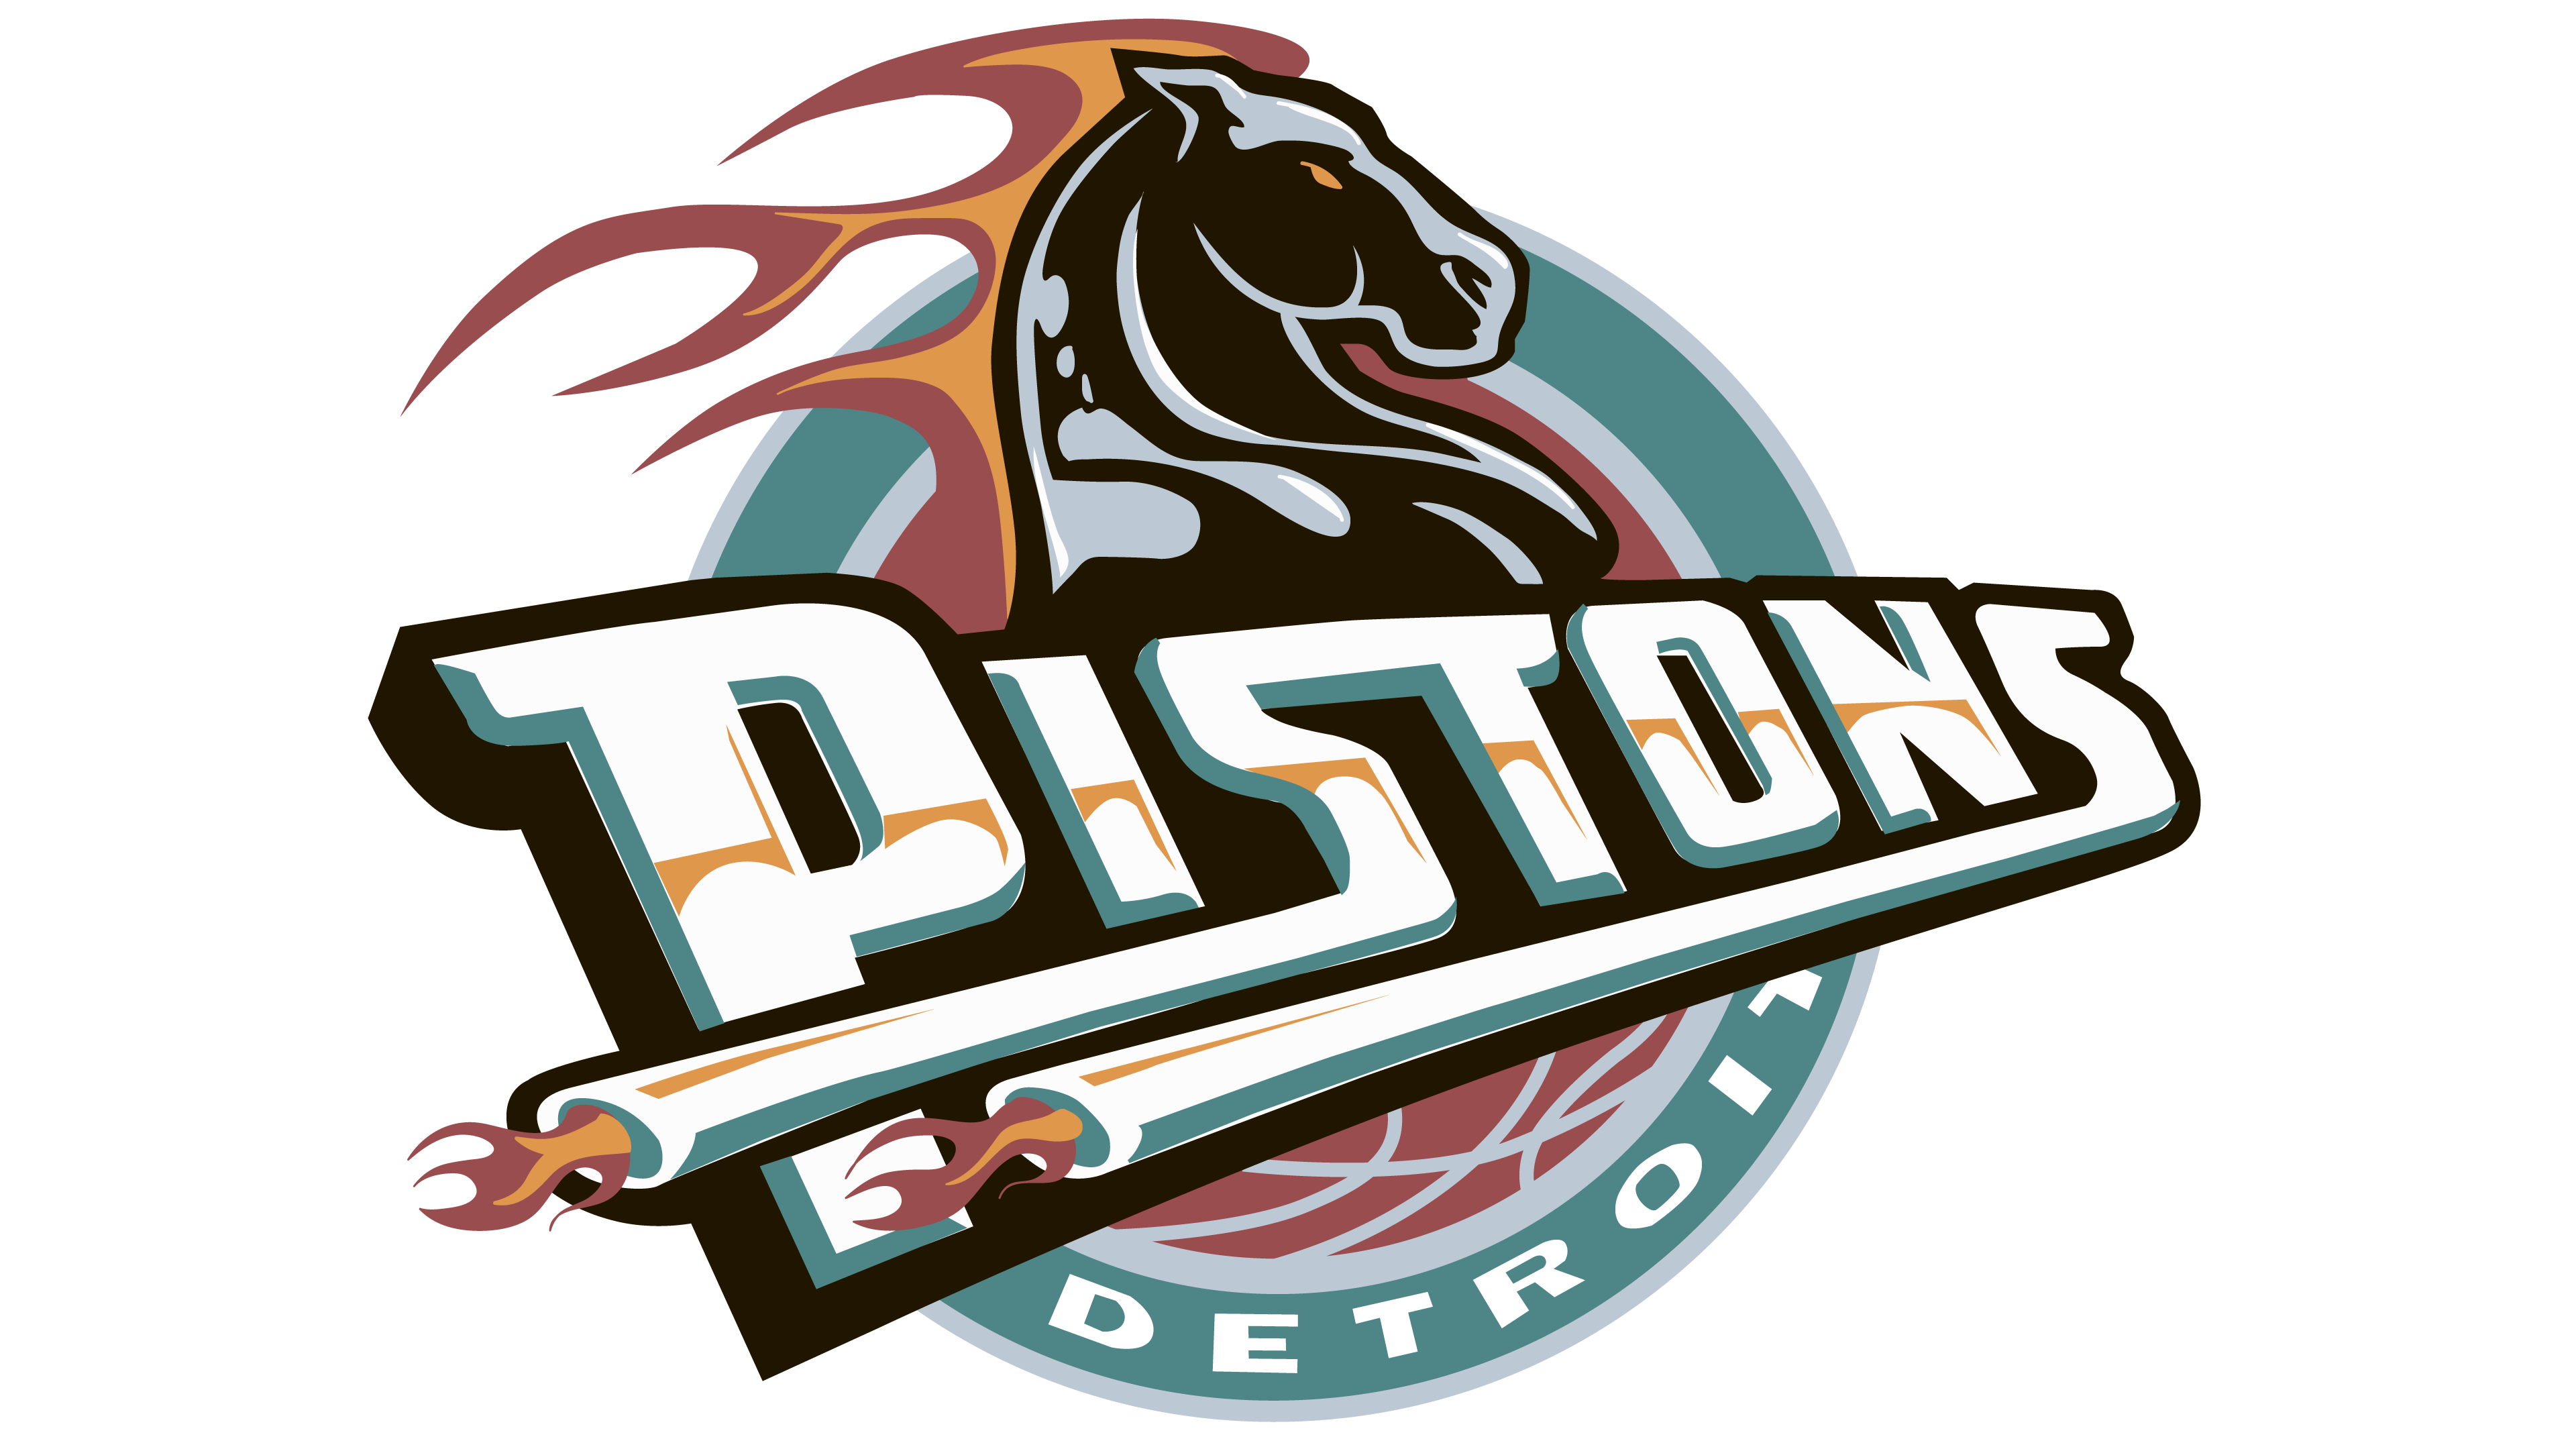 Pistons Logo - Detroit Pistons logo - Interesting History of the Team Name and emblem